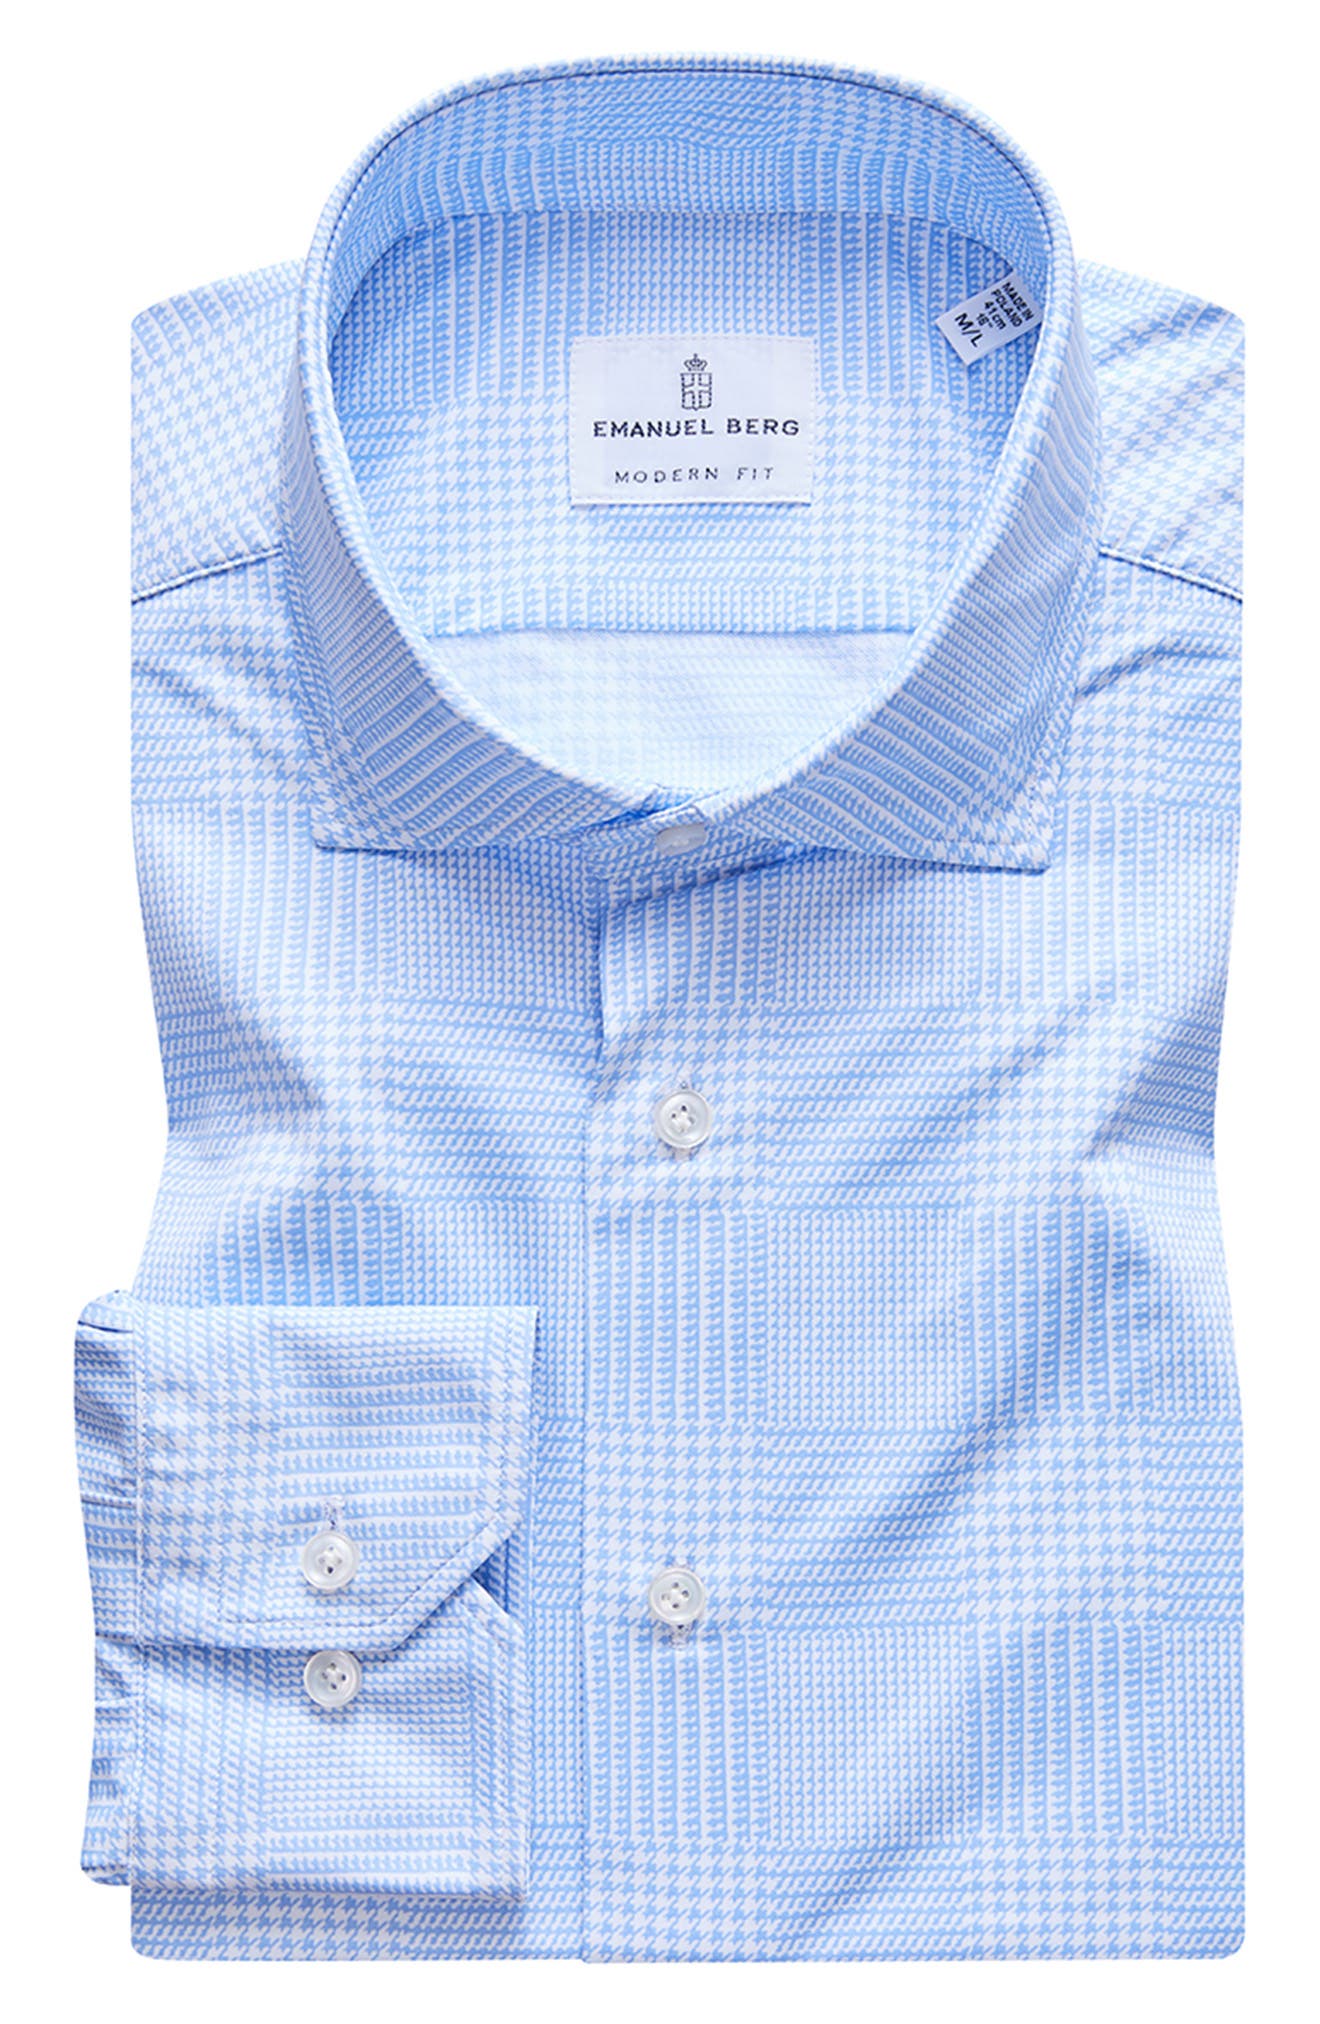 Emanuel Berg 4Flex Knit Modern Fit Long Sleeve Button-Up Shirt in Blue at Nordstrom